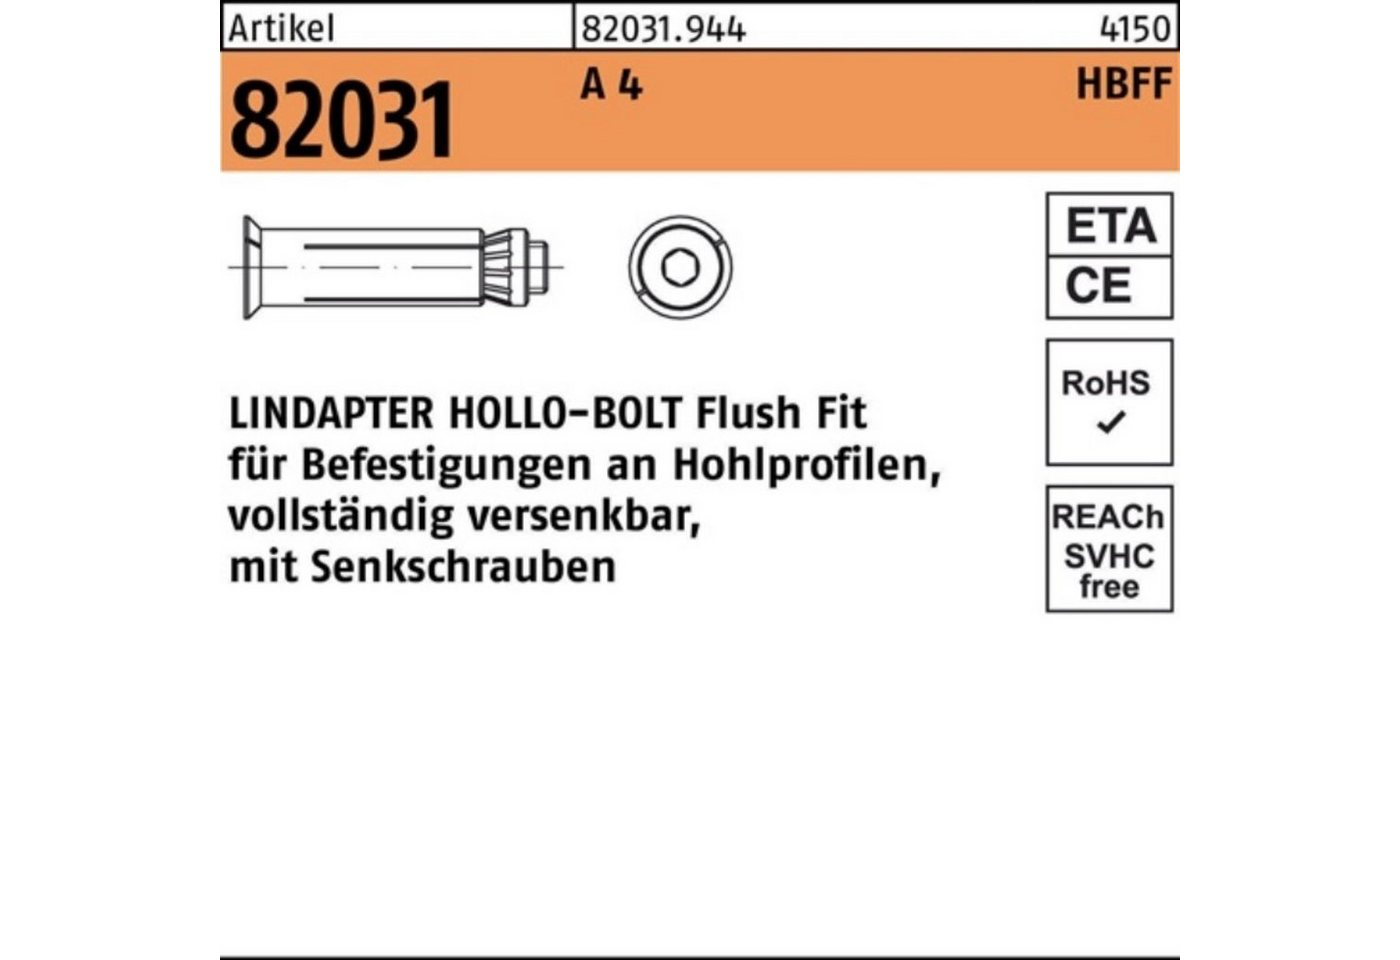 Lindapter Hohlraumdübel 100er Pack Hohlraumdübel R 82031 HBFF 10-1 (50/27) A 4 1 Stück Arti von Lindapter